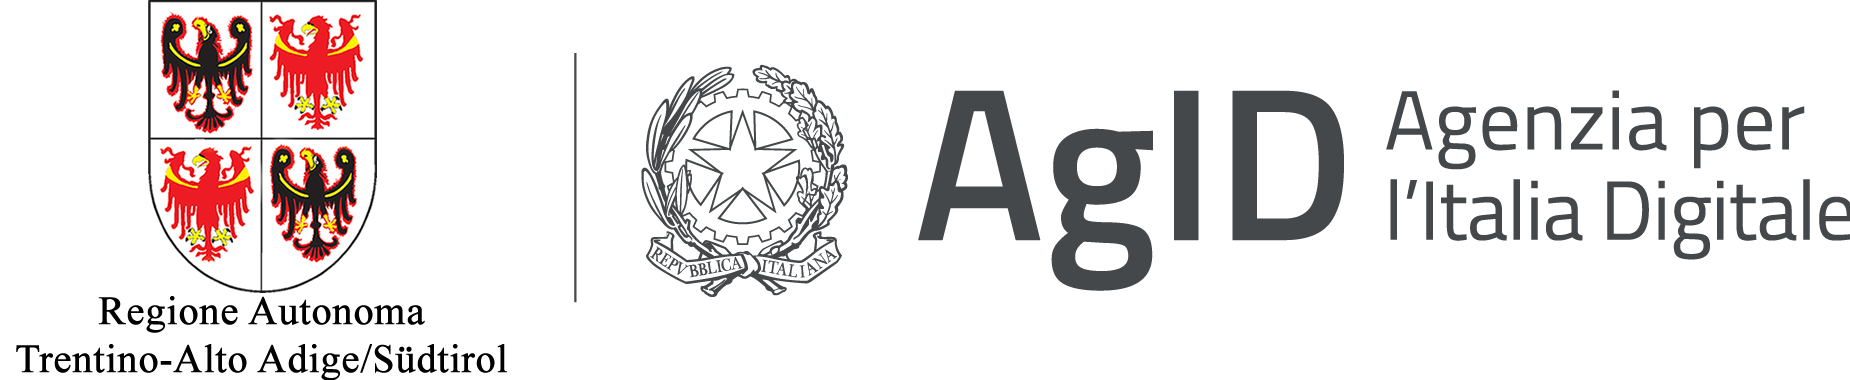 Logo RATAA - AGID - Agenzia per l'Italia Digitale